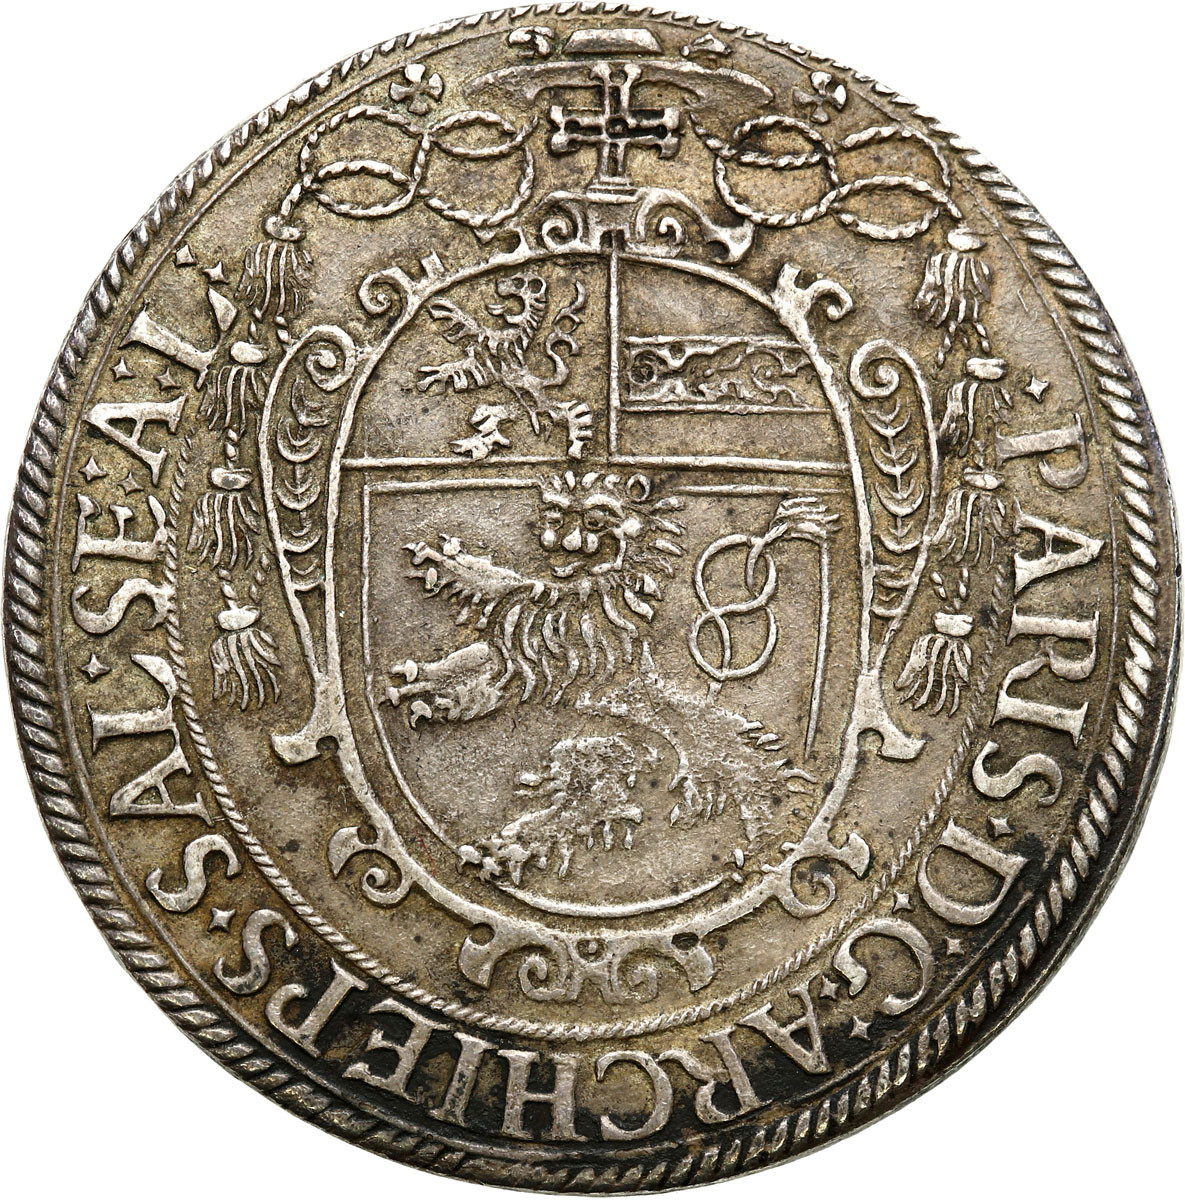 Austria, Salzburg. Paris graf Lodron (1619-1653). Talar 1623, Salzburg